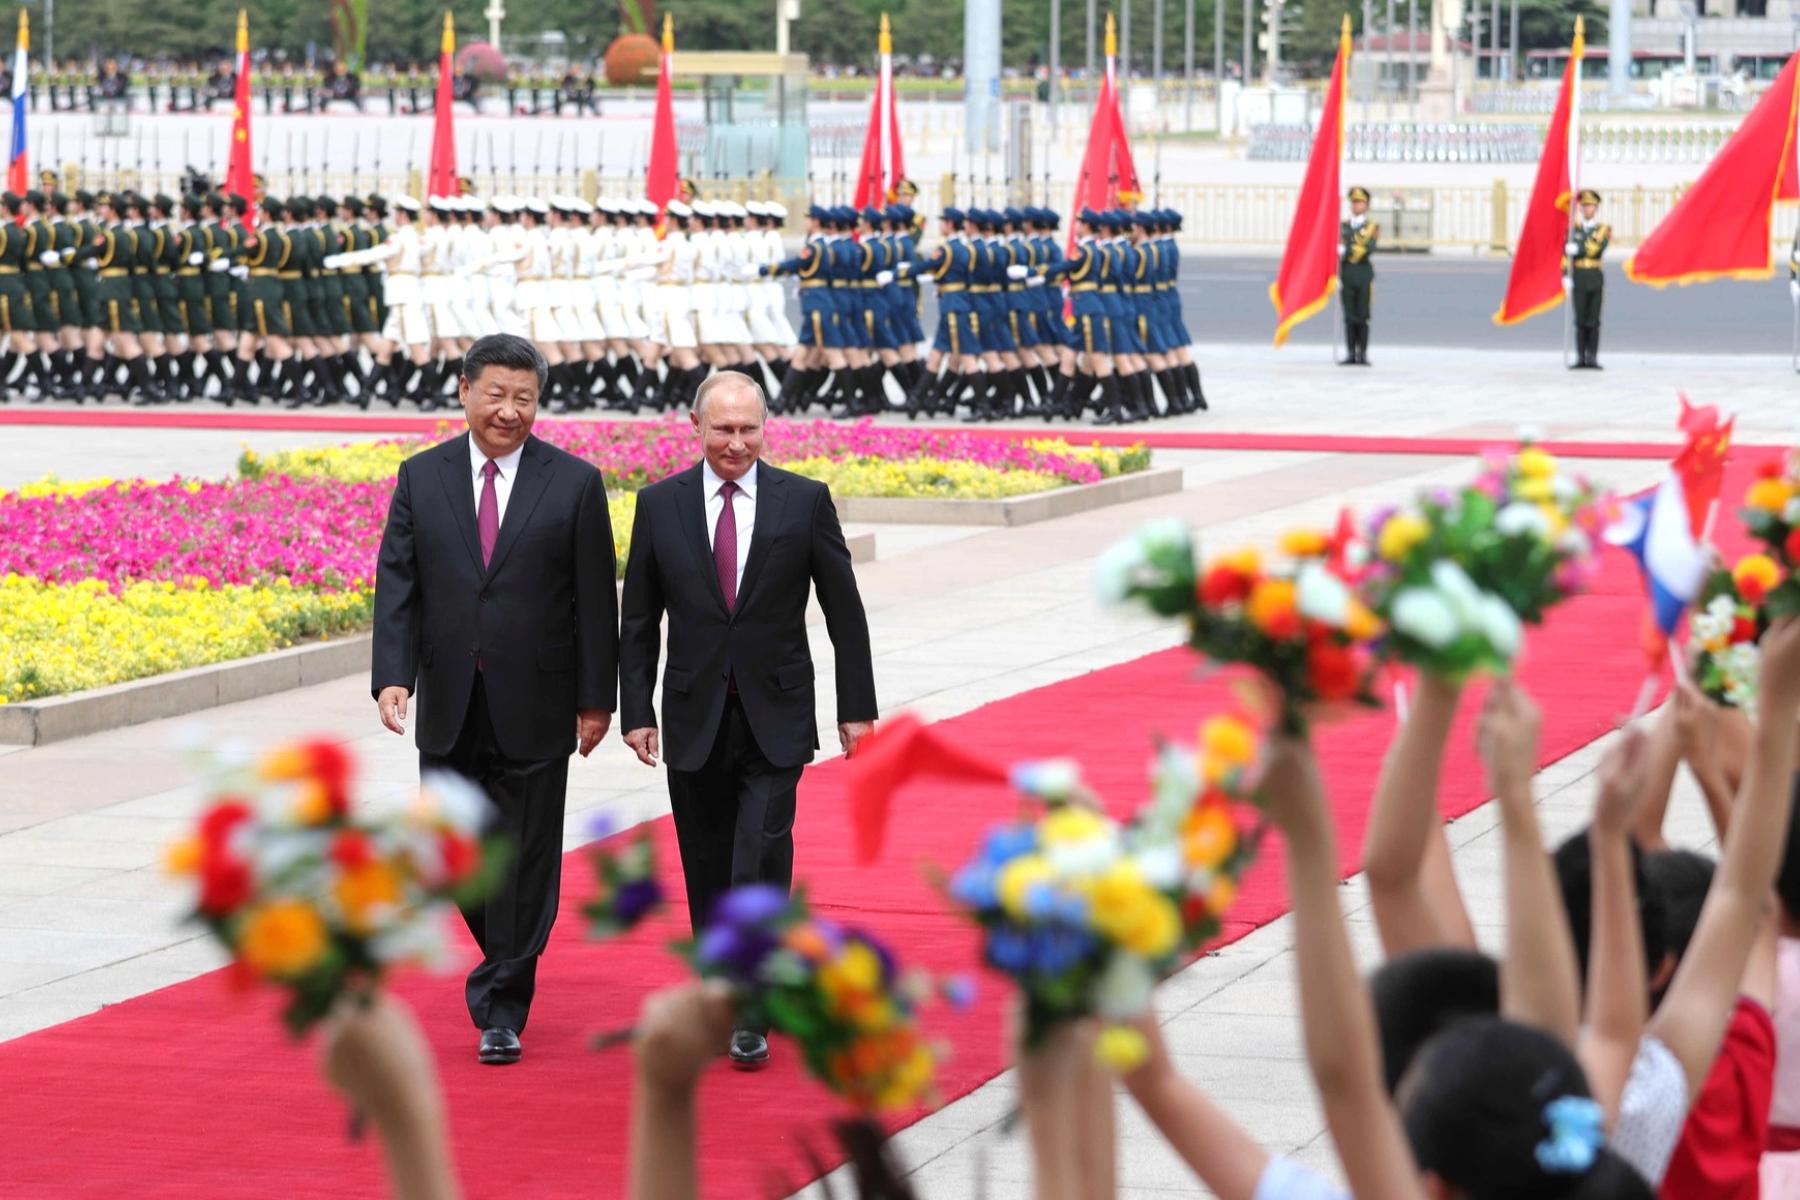 Den russiske præsident på officielt besøg i Kina i 2018. Foto: Wikimedia commons (https://commons.wikimedia.org/wiki/File:The_President_of_Russia_arrived_in_China_on_a_state_visit._01.jpg)